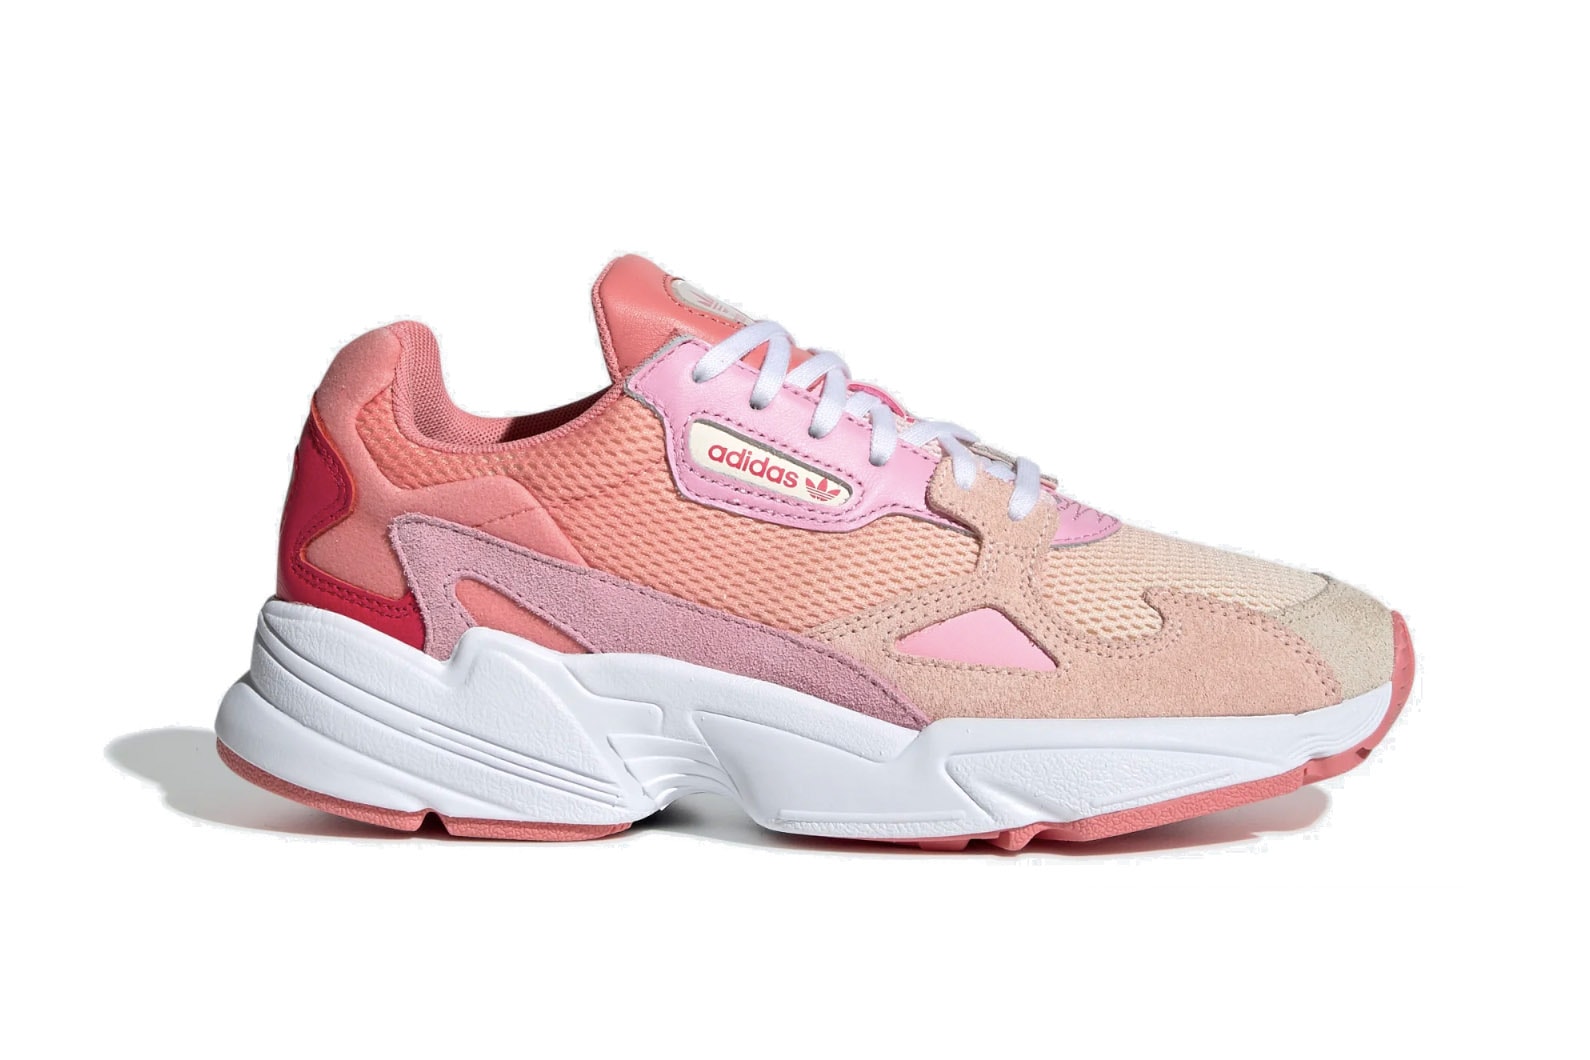 adidas Originals Falcon Coral/True Pink Release White Sneaker Shoe White Sole Summer Release